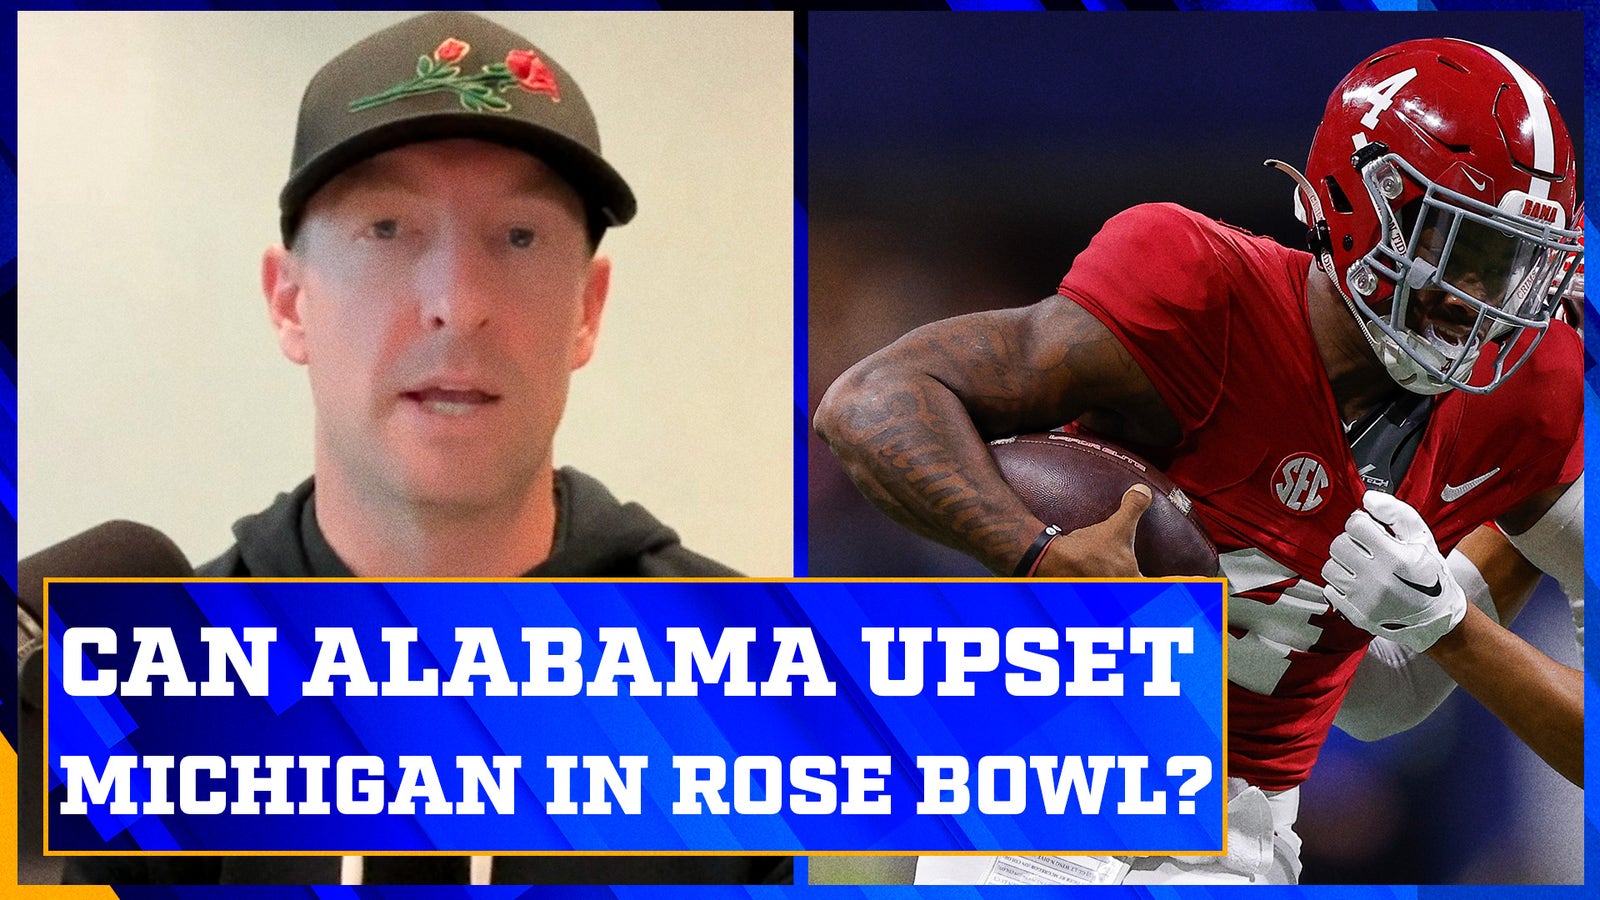 Rose Bowl preview: Will Alabama and Nick Saban topple Michigan?